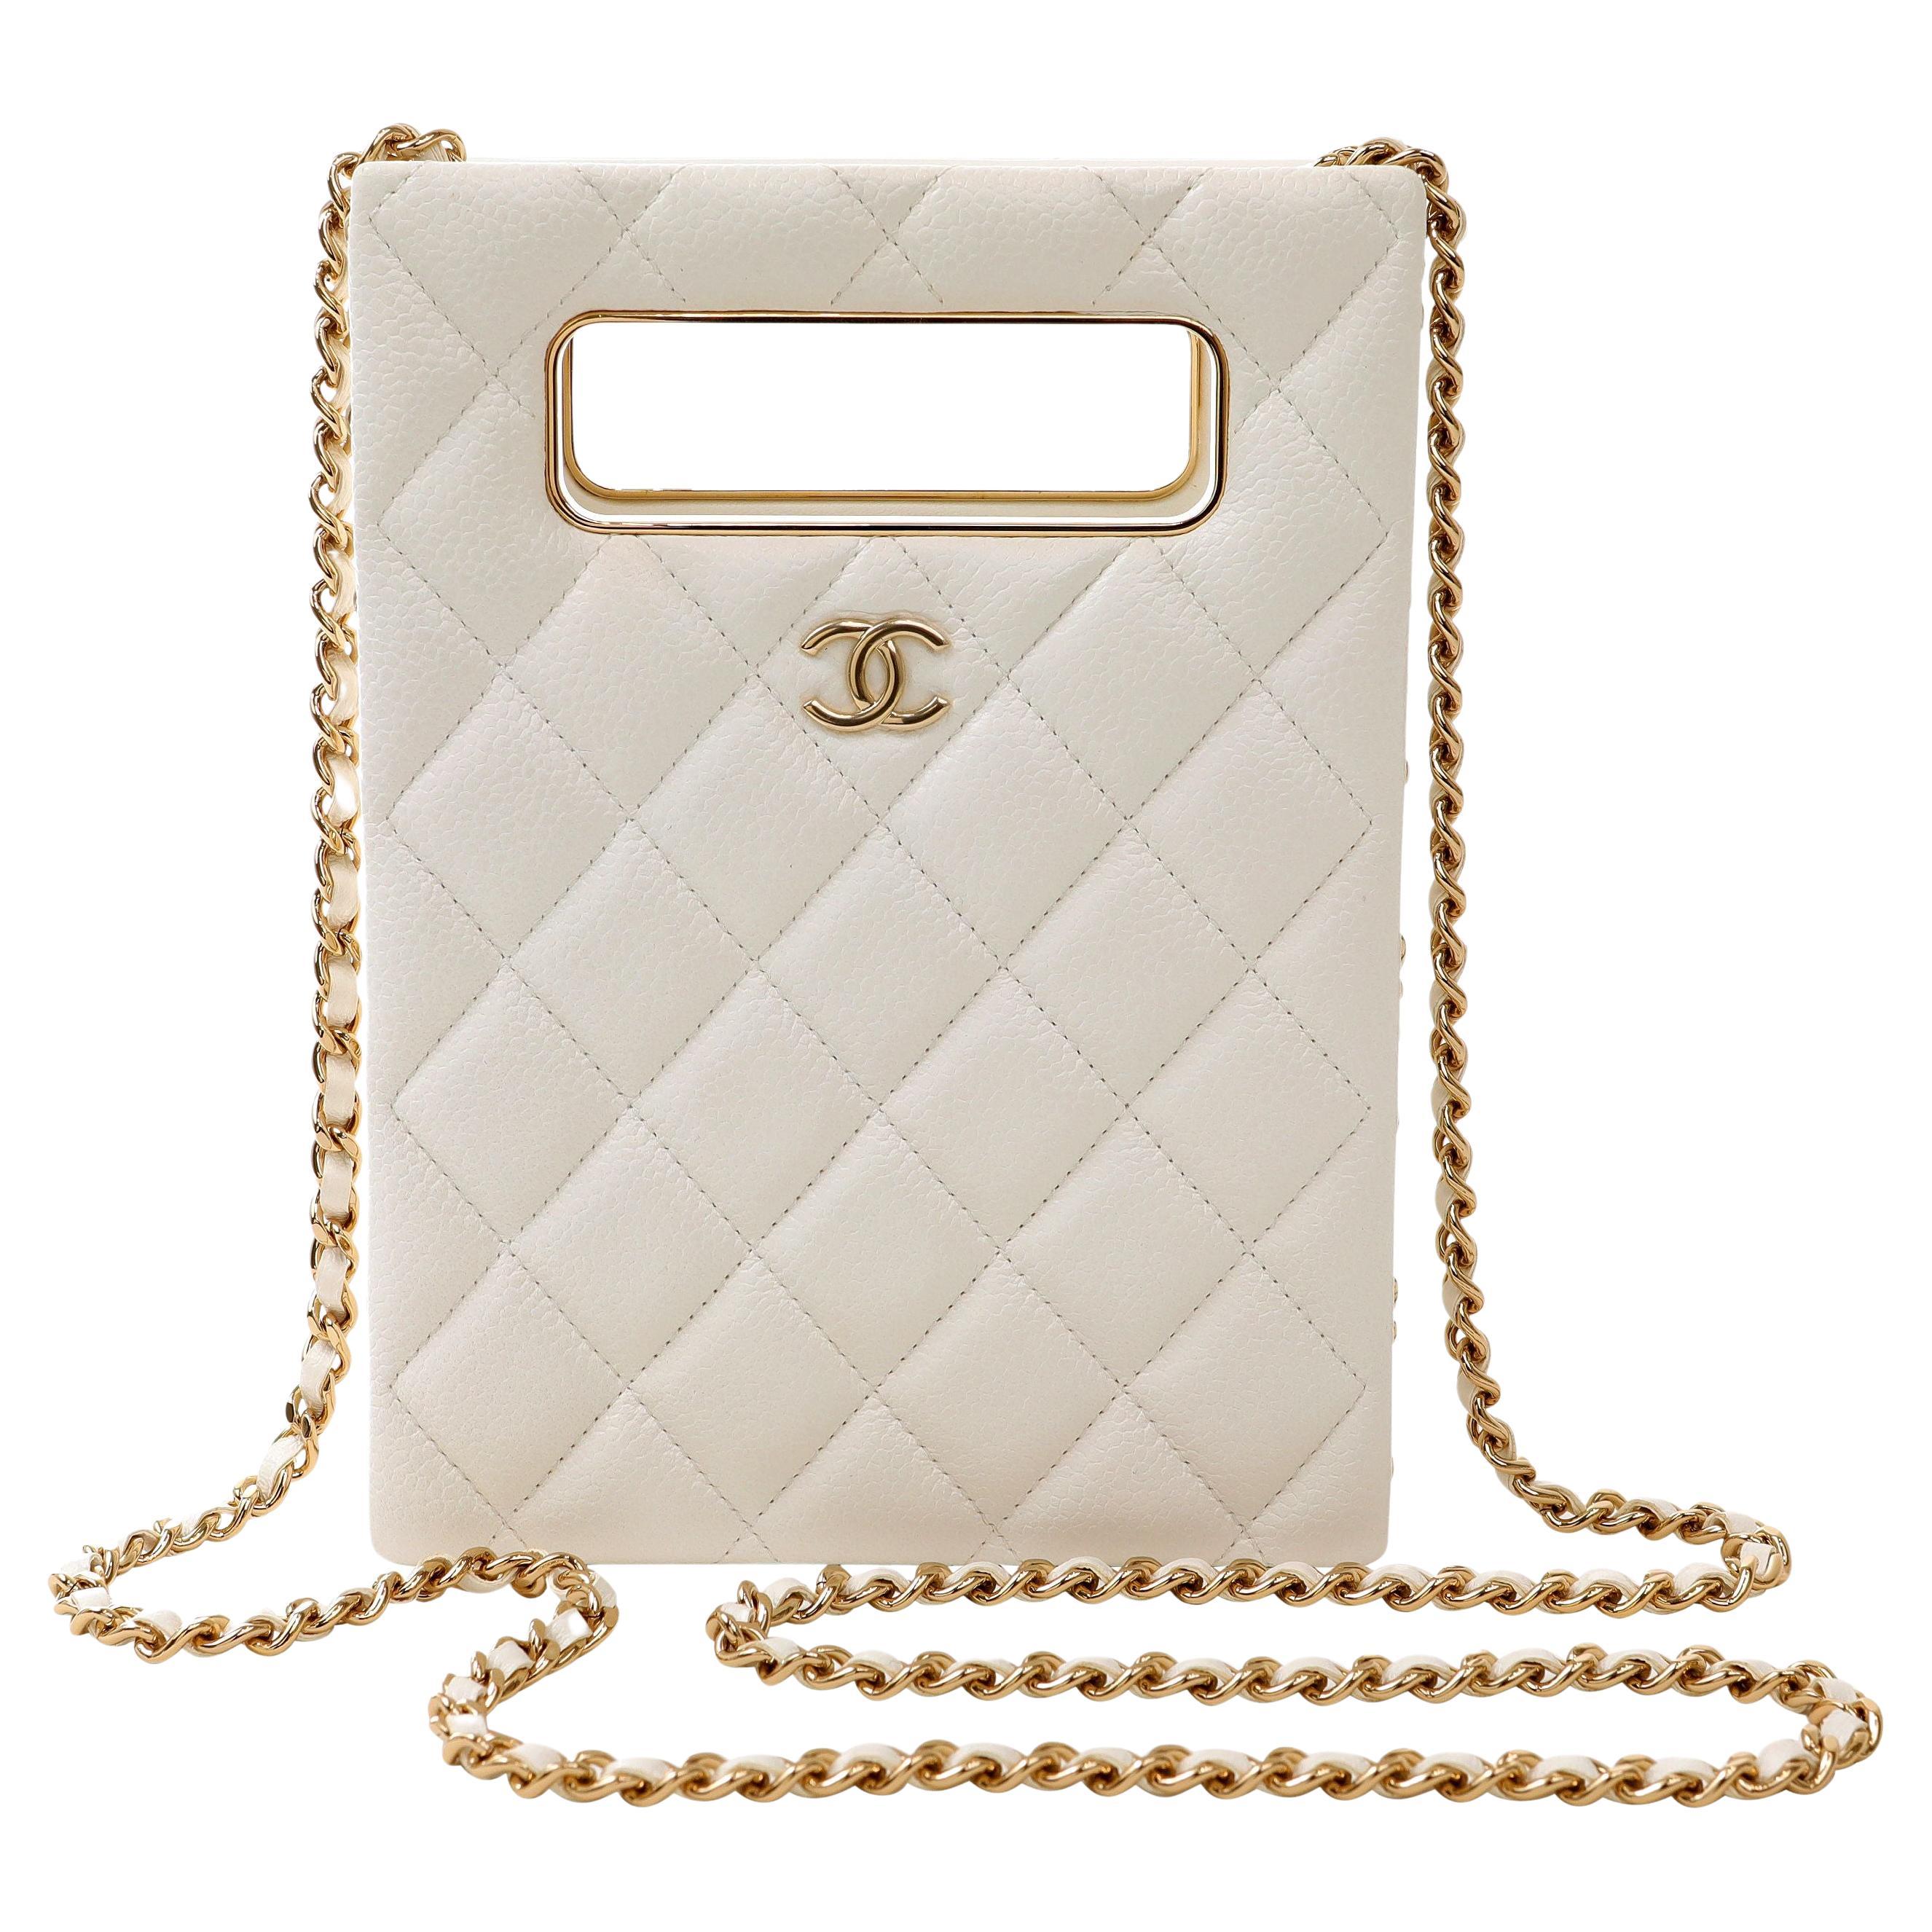 Chanel White Crossbody Bag - 77 For Sale on 1stDibs